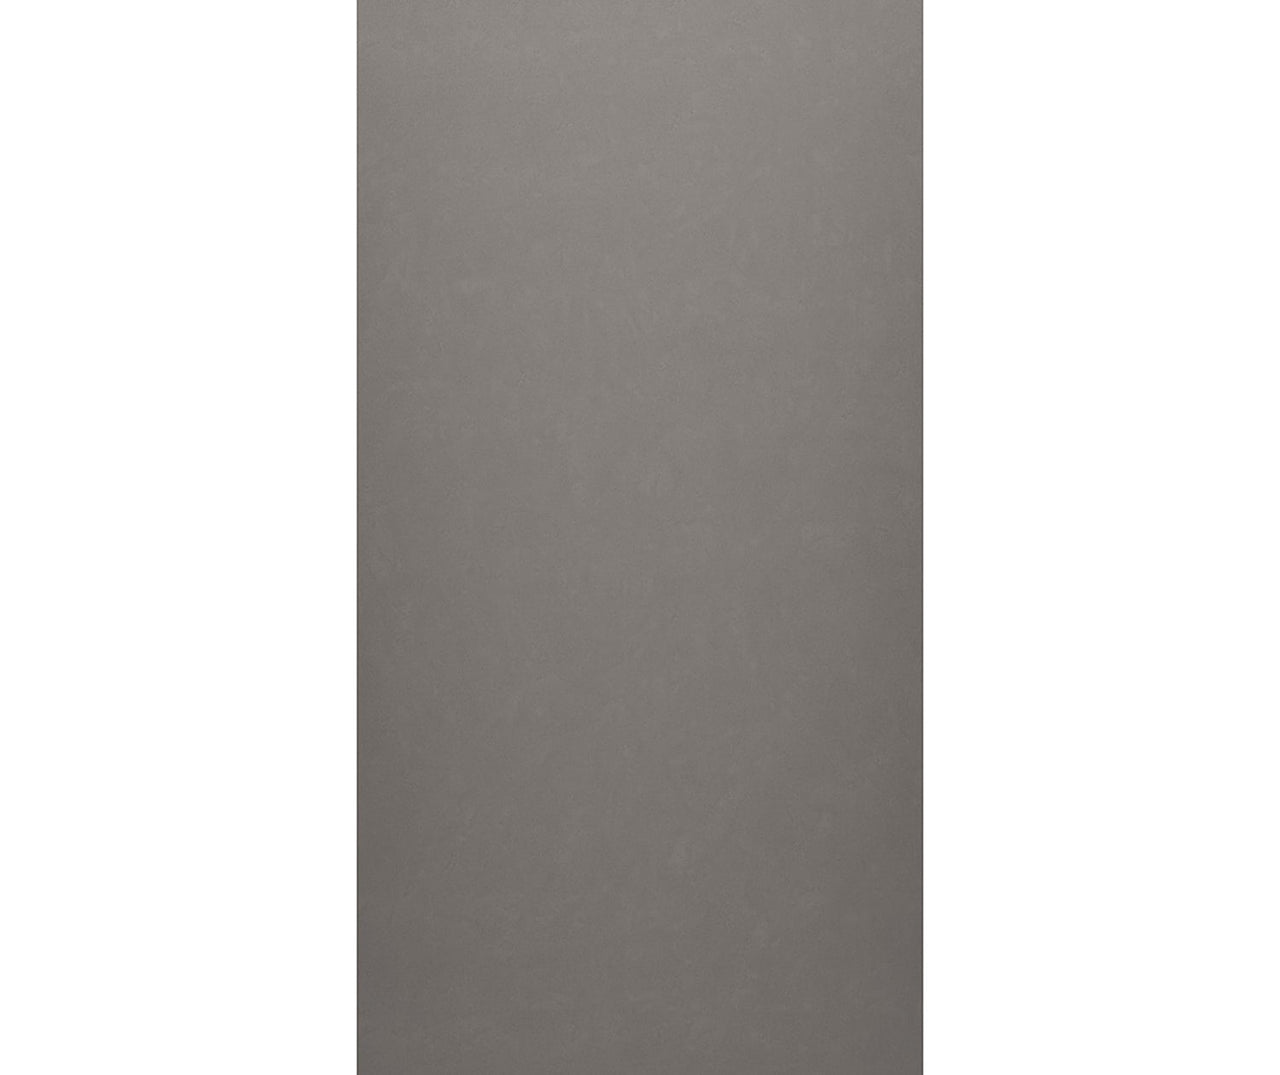 SMMK-7230-1 30 x 72 Swanstone Smooth Tile Glue up Bathtub and Shower Single Wall Panel  - BNGBath